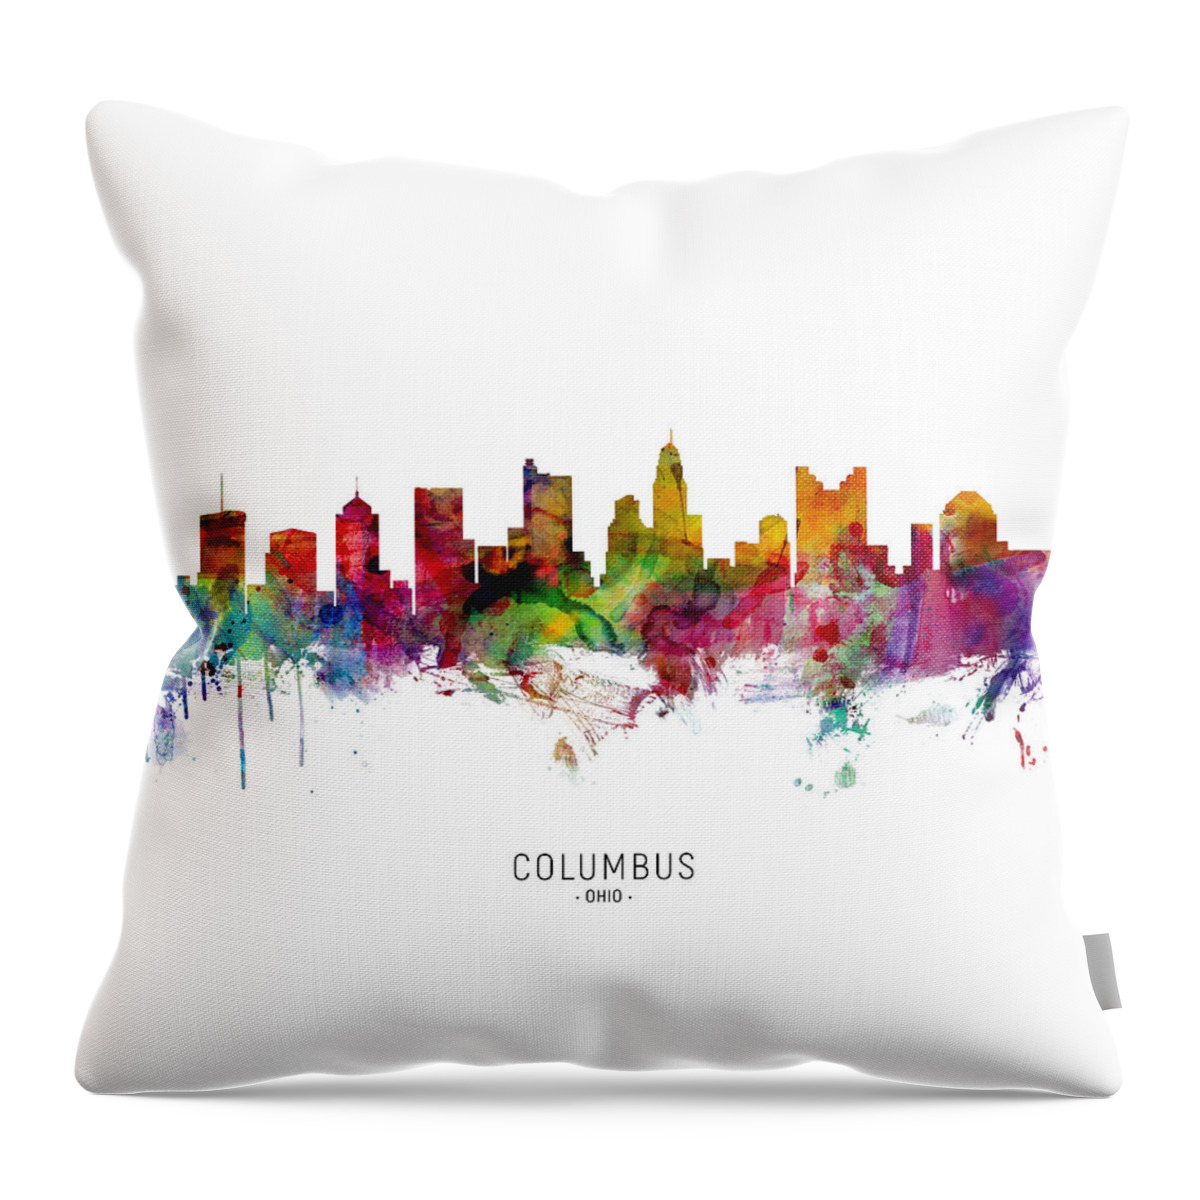 Columbus Throw Pillow featuring the digital art Columbus Ohio Skyline by Michael Tompsett